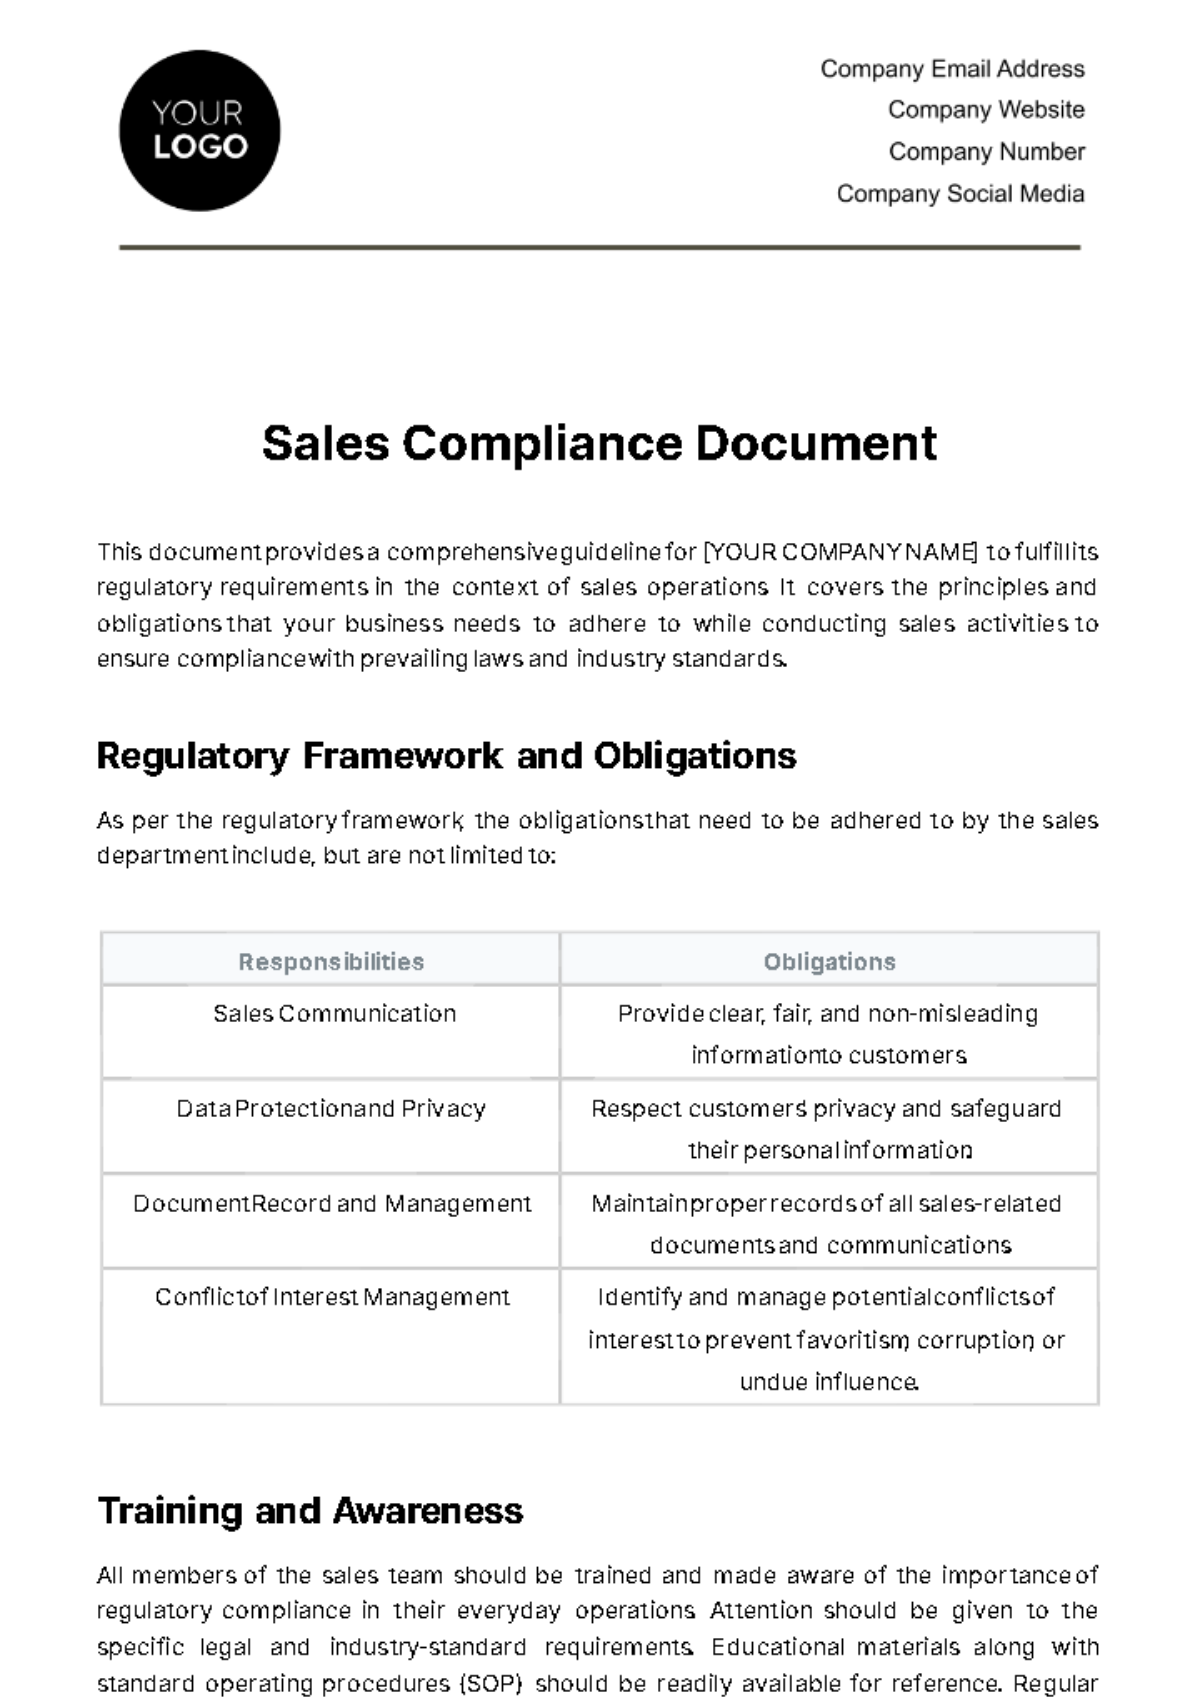 Sales Compliance Document Template